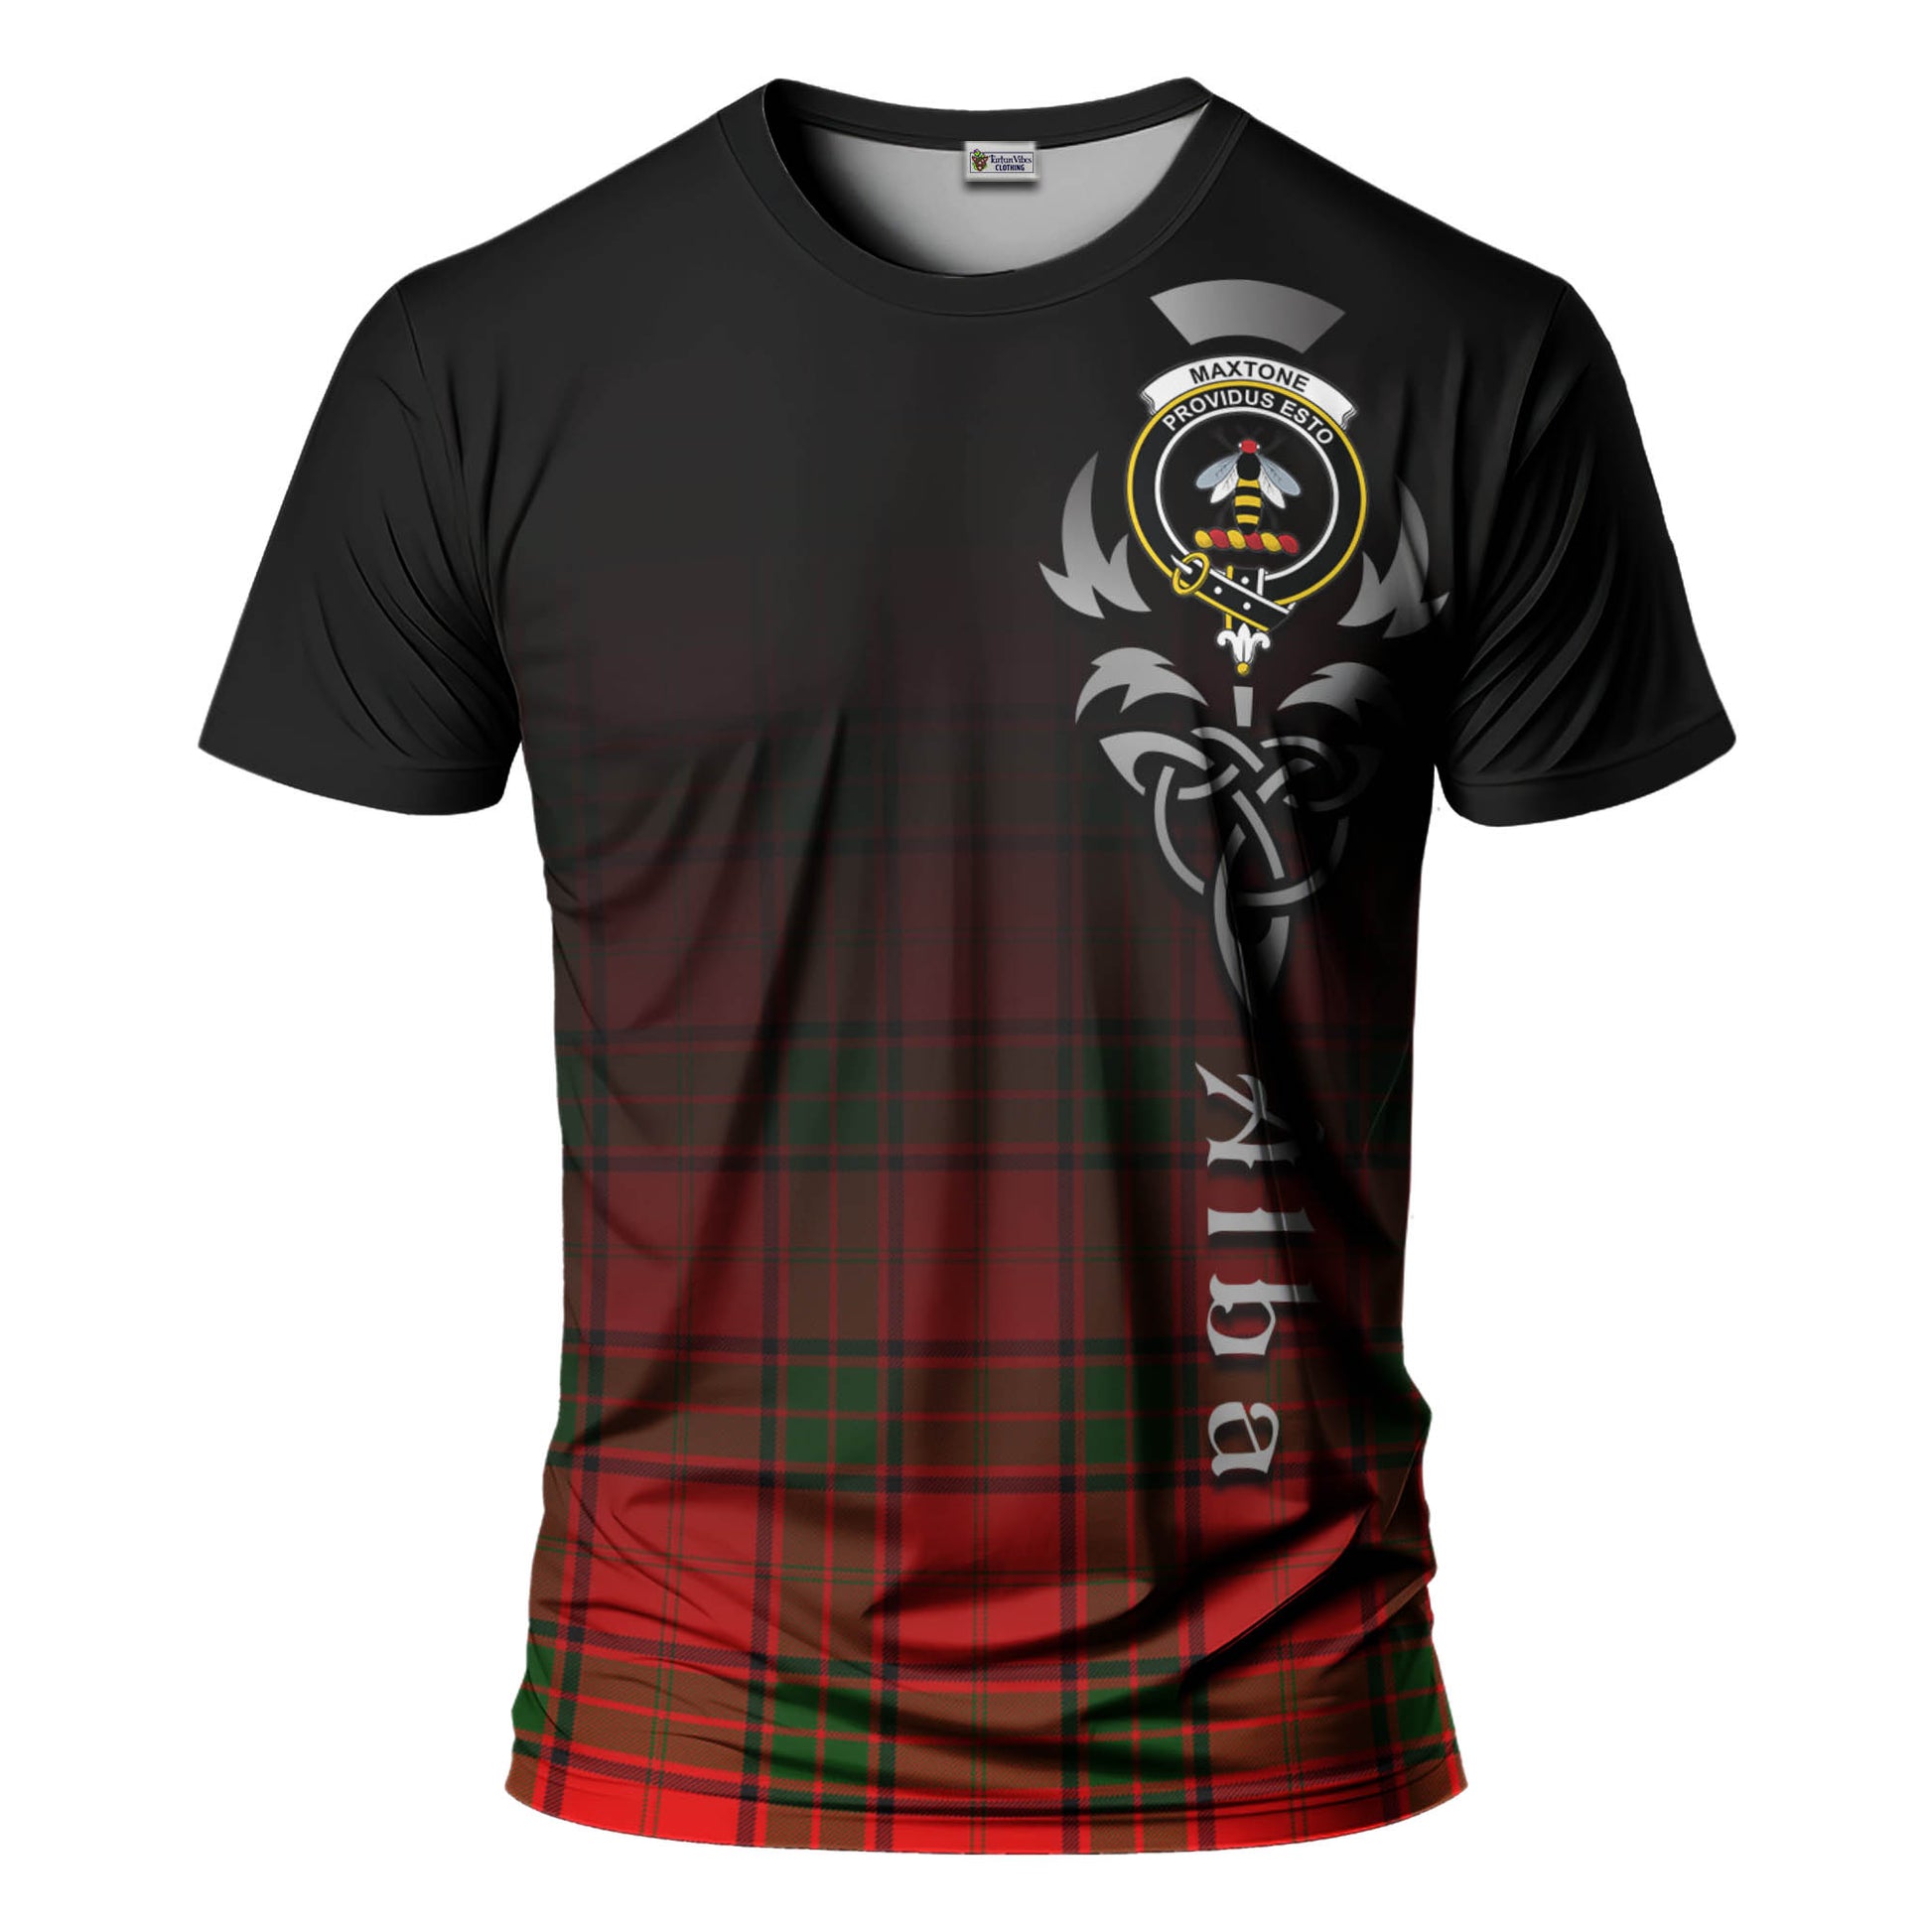 Tartan Vibes Clothing Maxtone Tartan T-Shirt Featuring Alba Gu Brath Family Crest Celtic Inspired